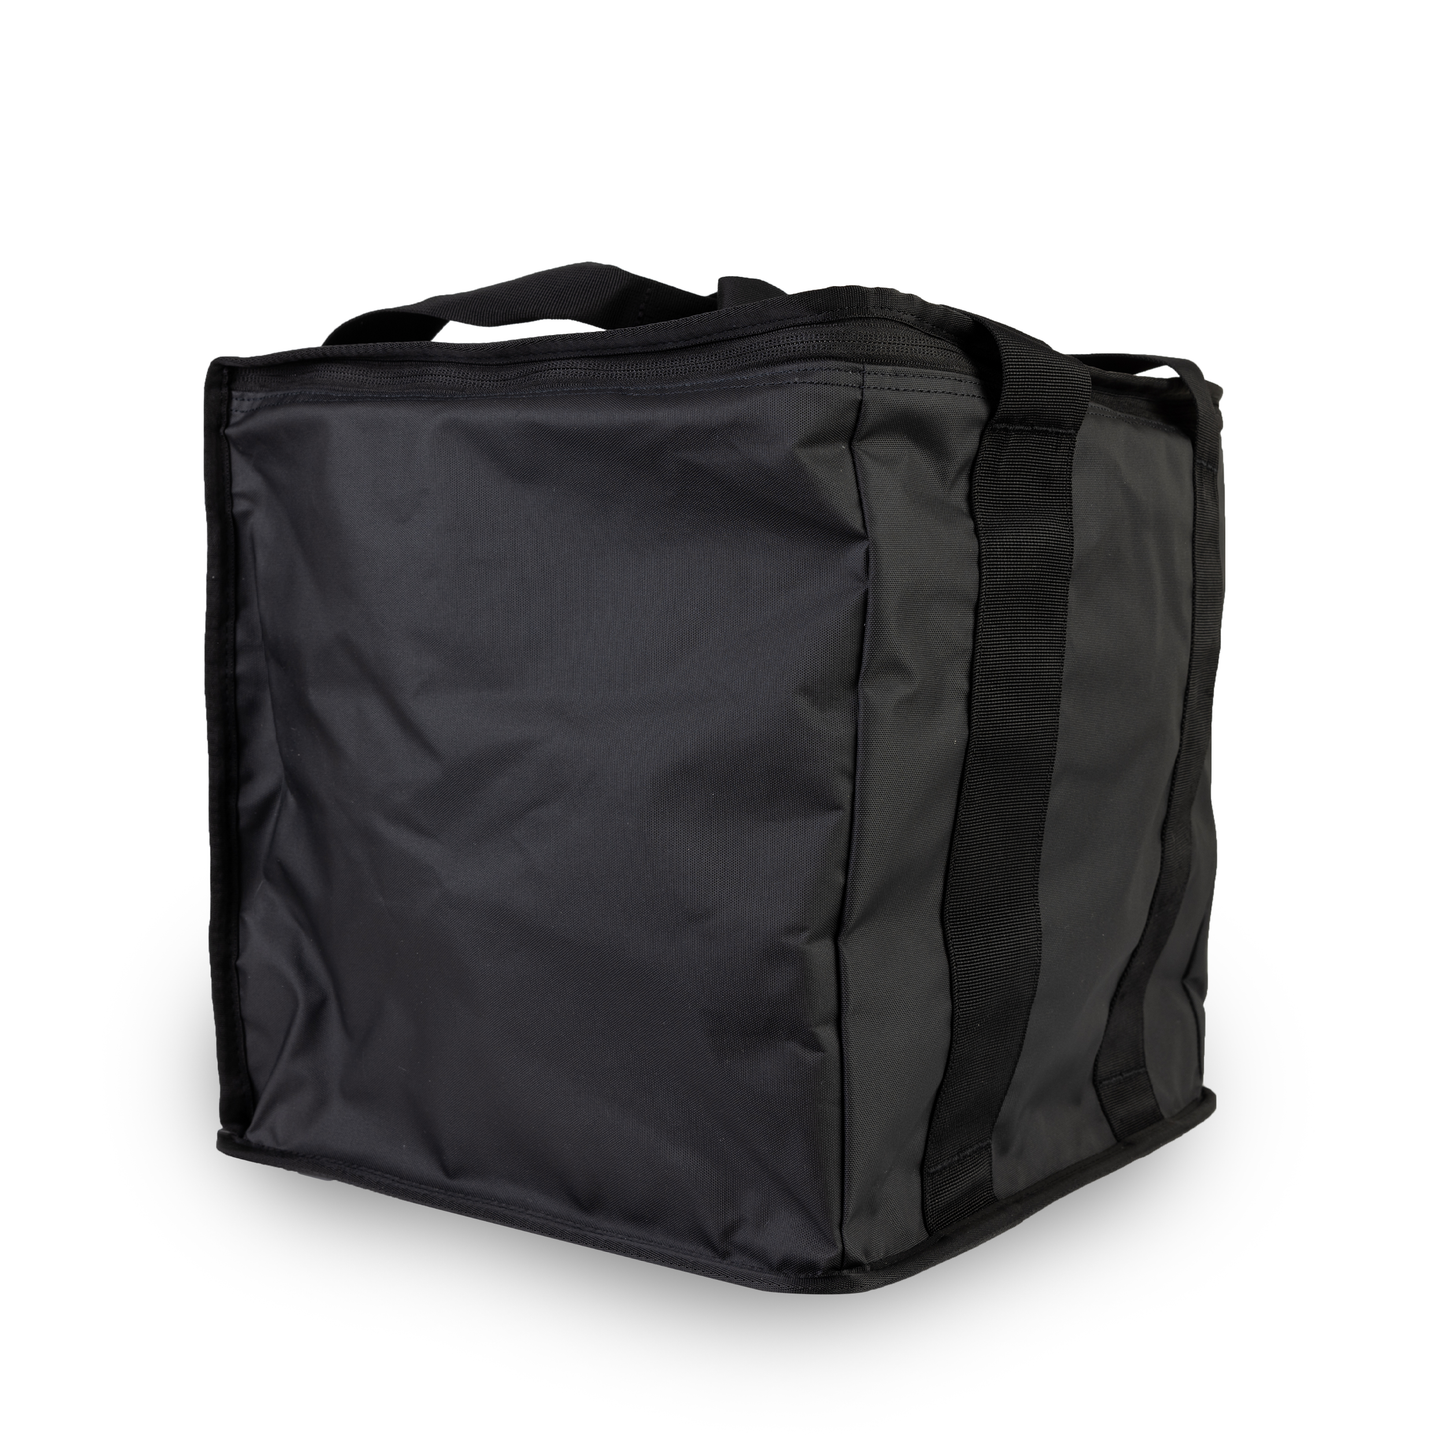 Rugged Bag 1.3 by ROAM Adventure Co.